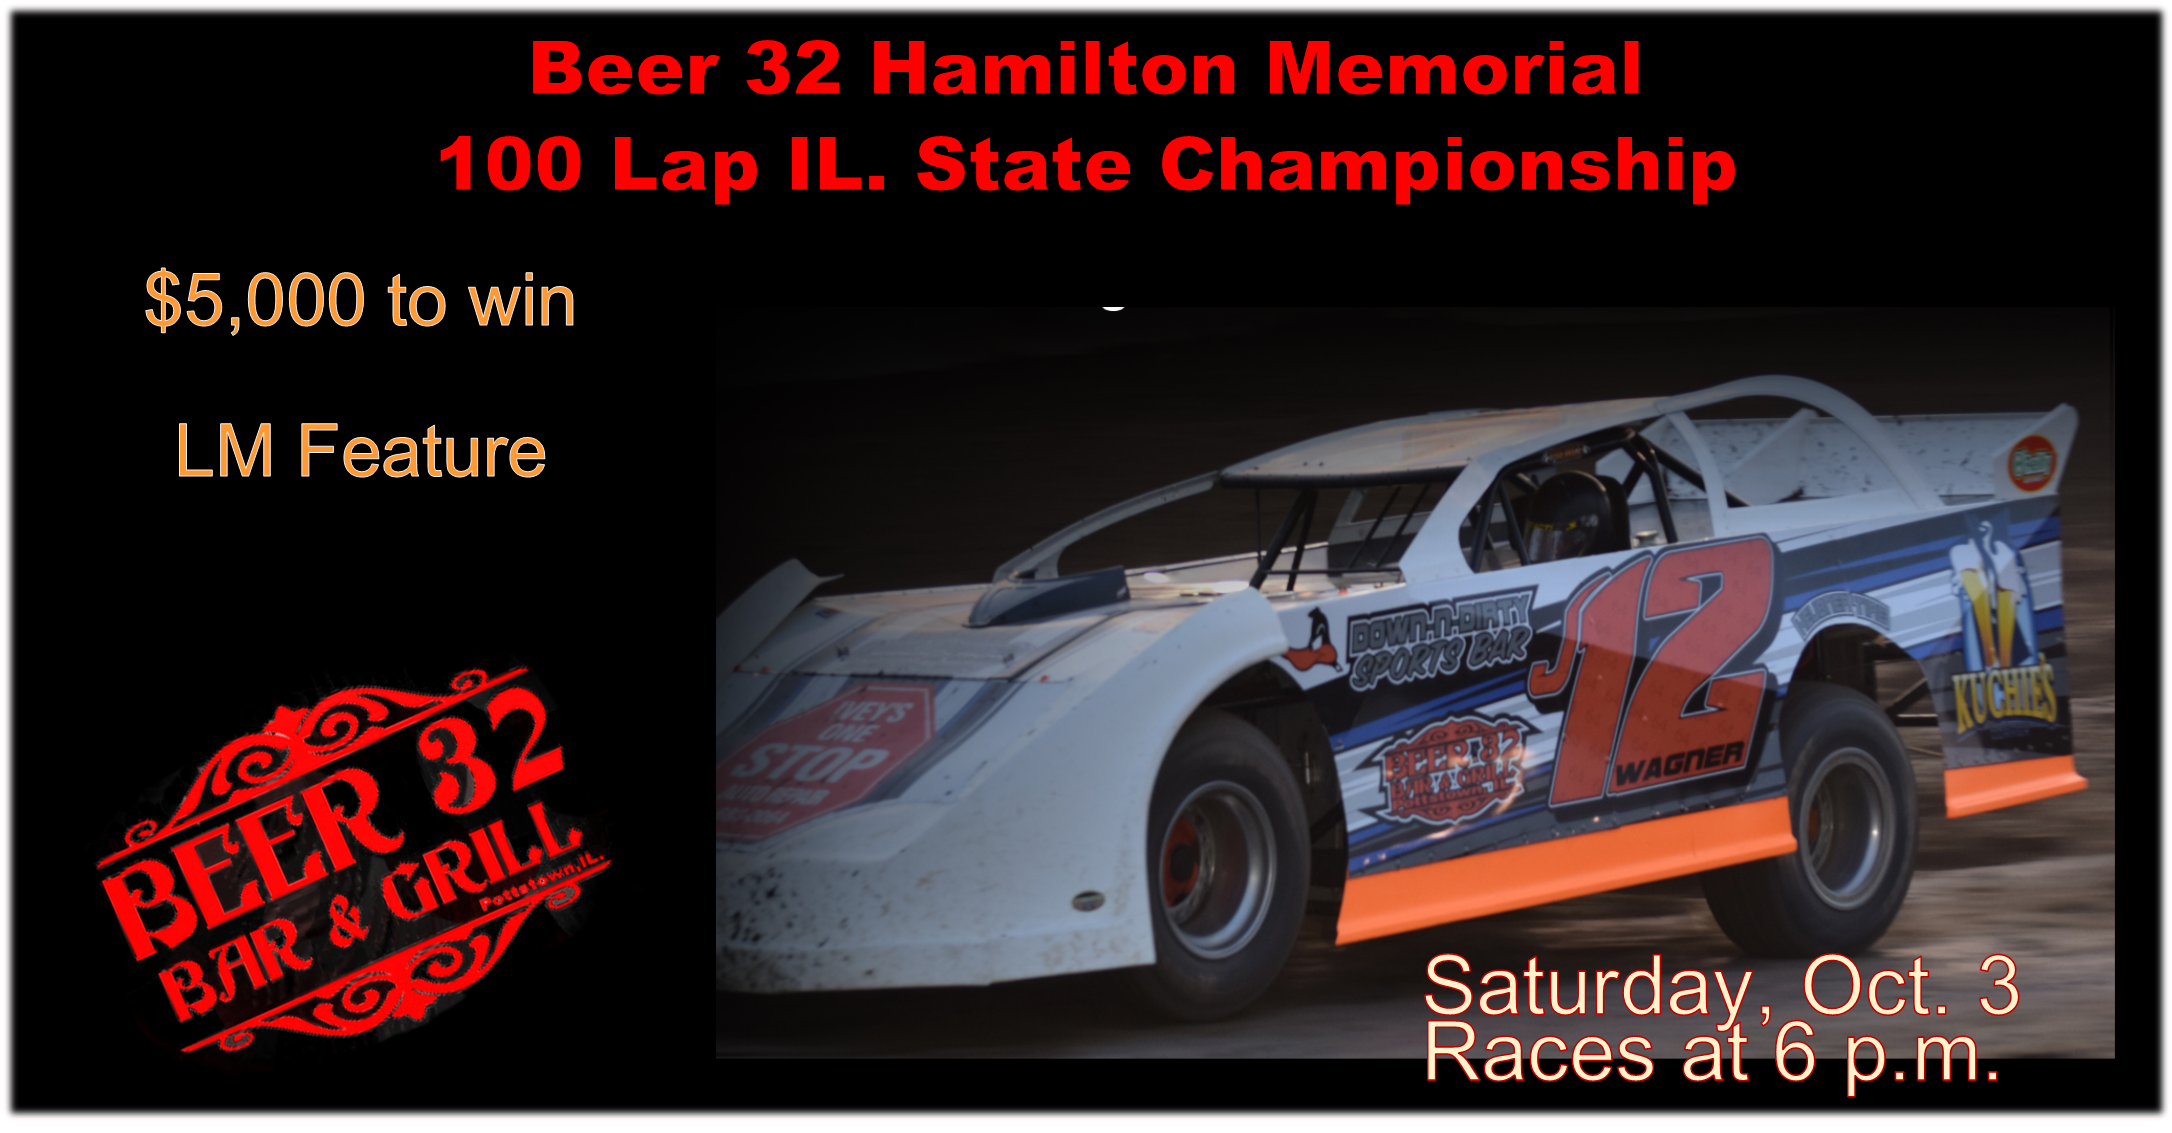 Beer 32 Hamilton Memorial 100 Lap IL State Championship Oct. 3 post thumbnail image